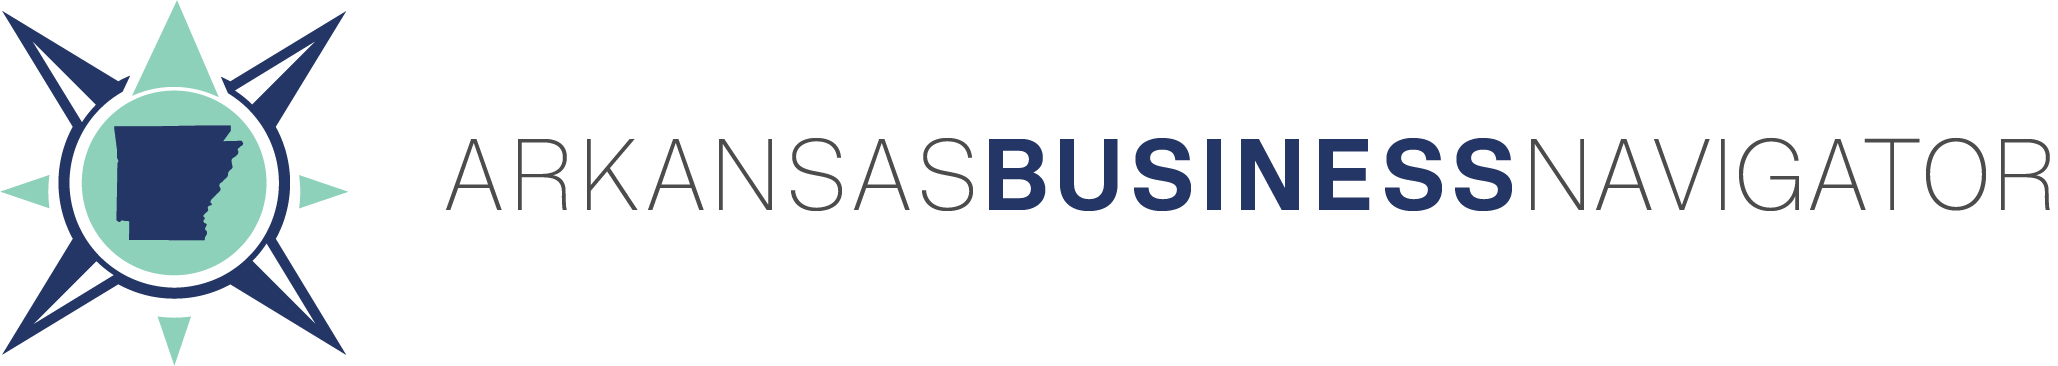 Arkansas Business Navigator logo